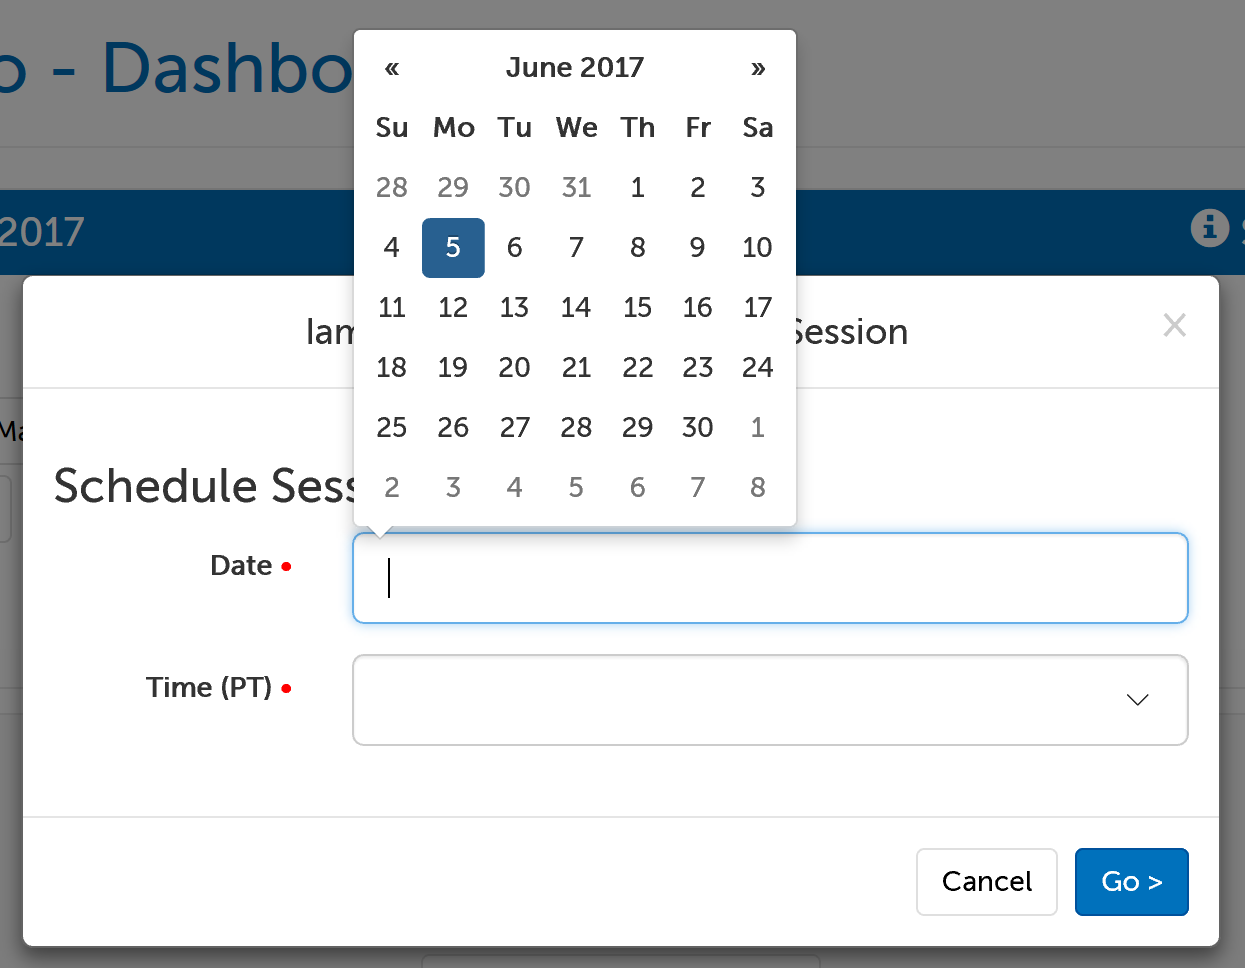 Calendar menu for selecting a session date